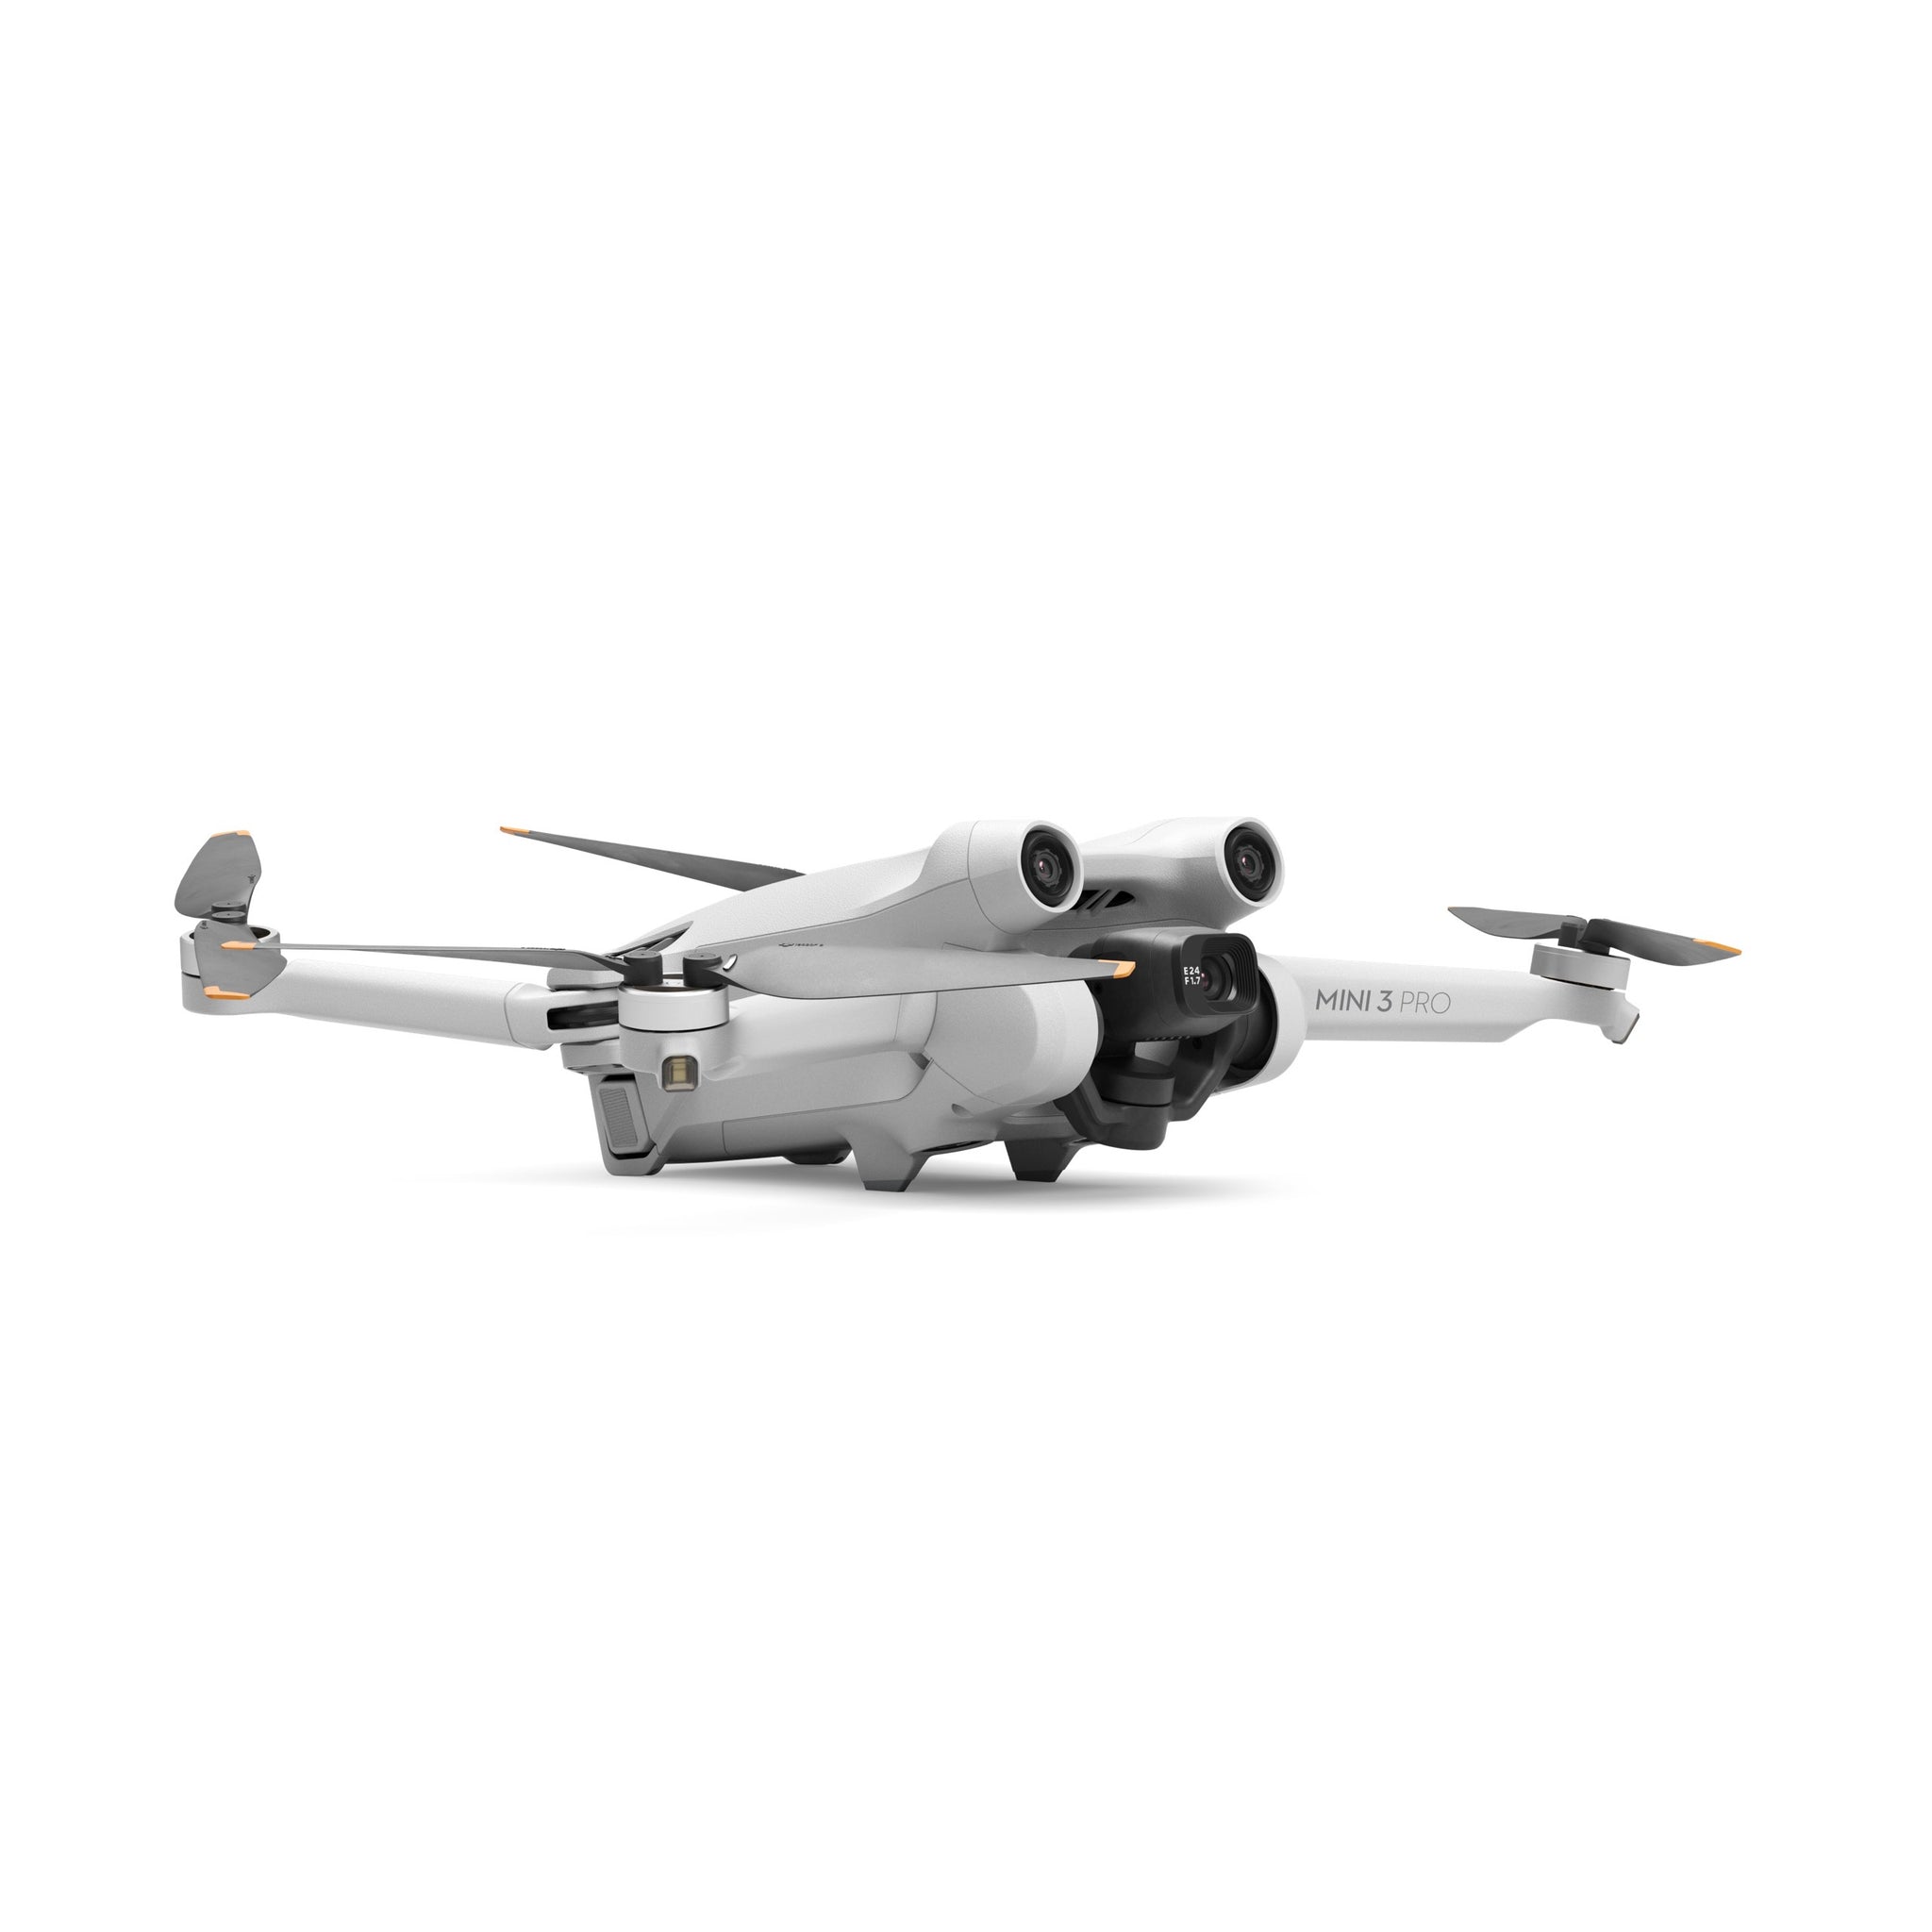 Mini 3 Pro - Cloud City Drones